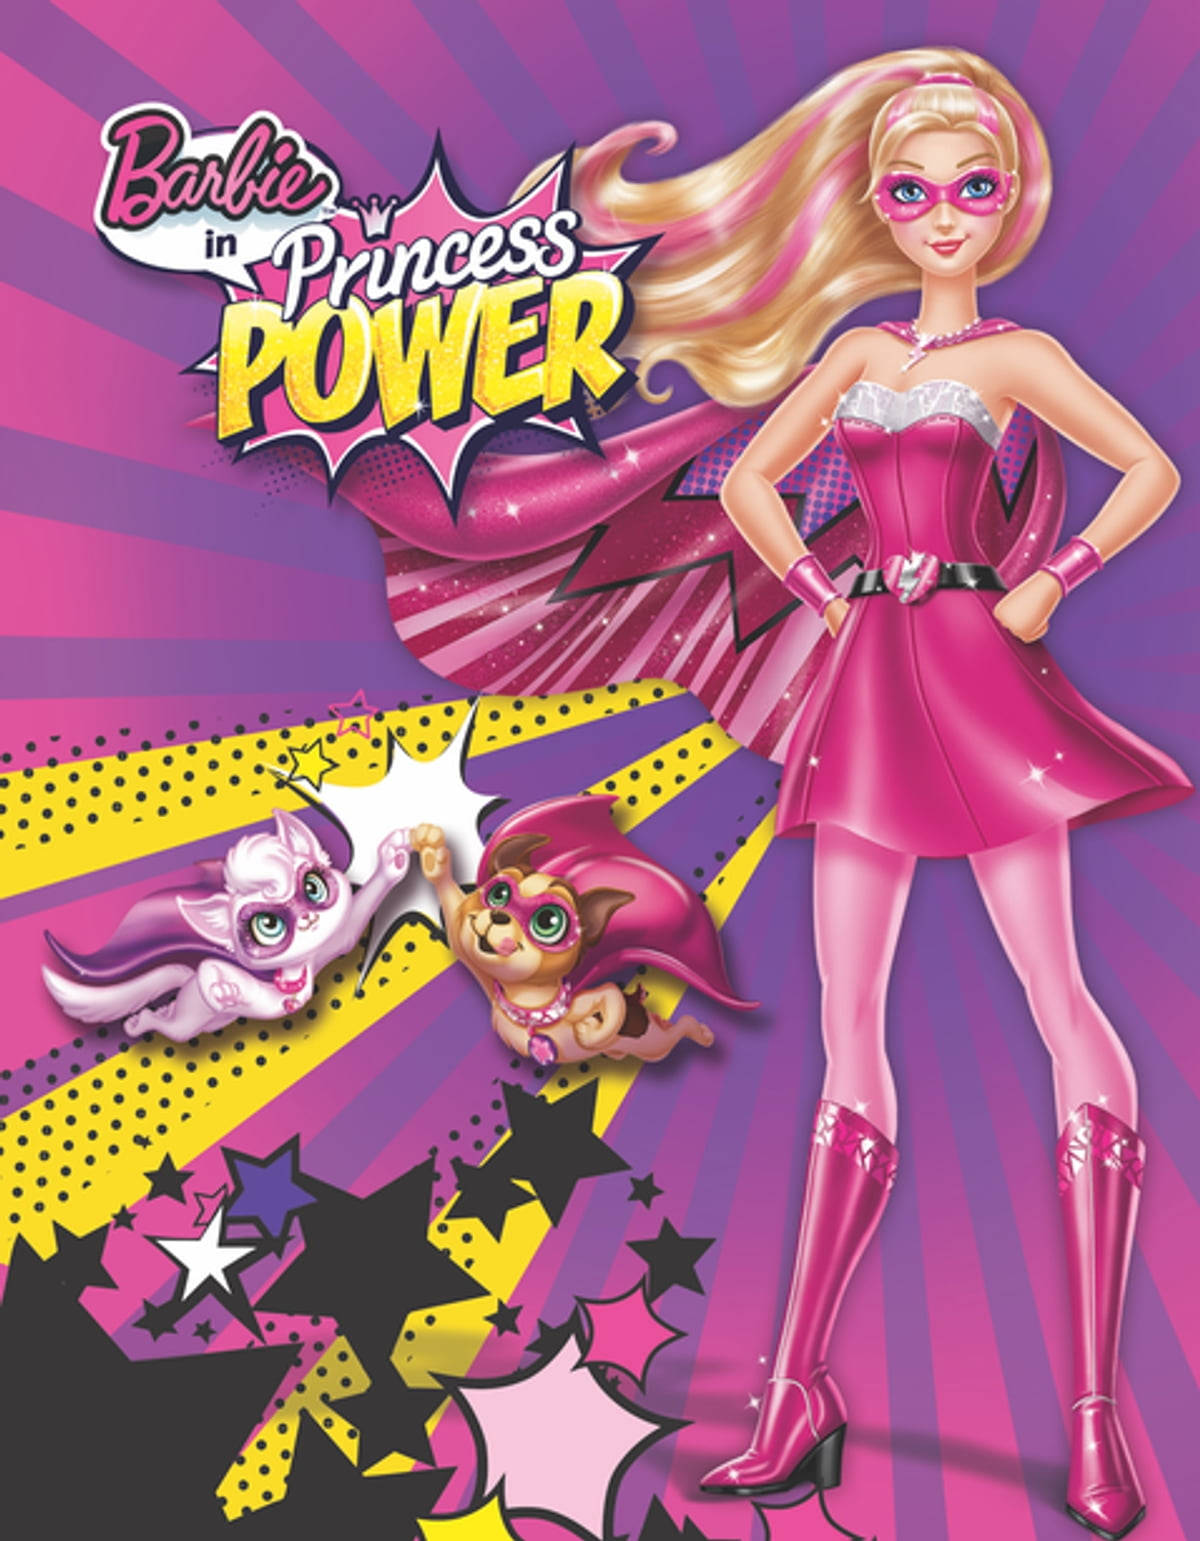 Barbie Princess Power Poster Wallpaper